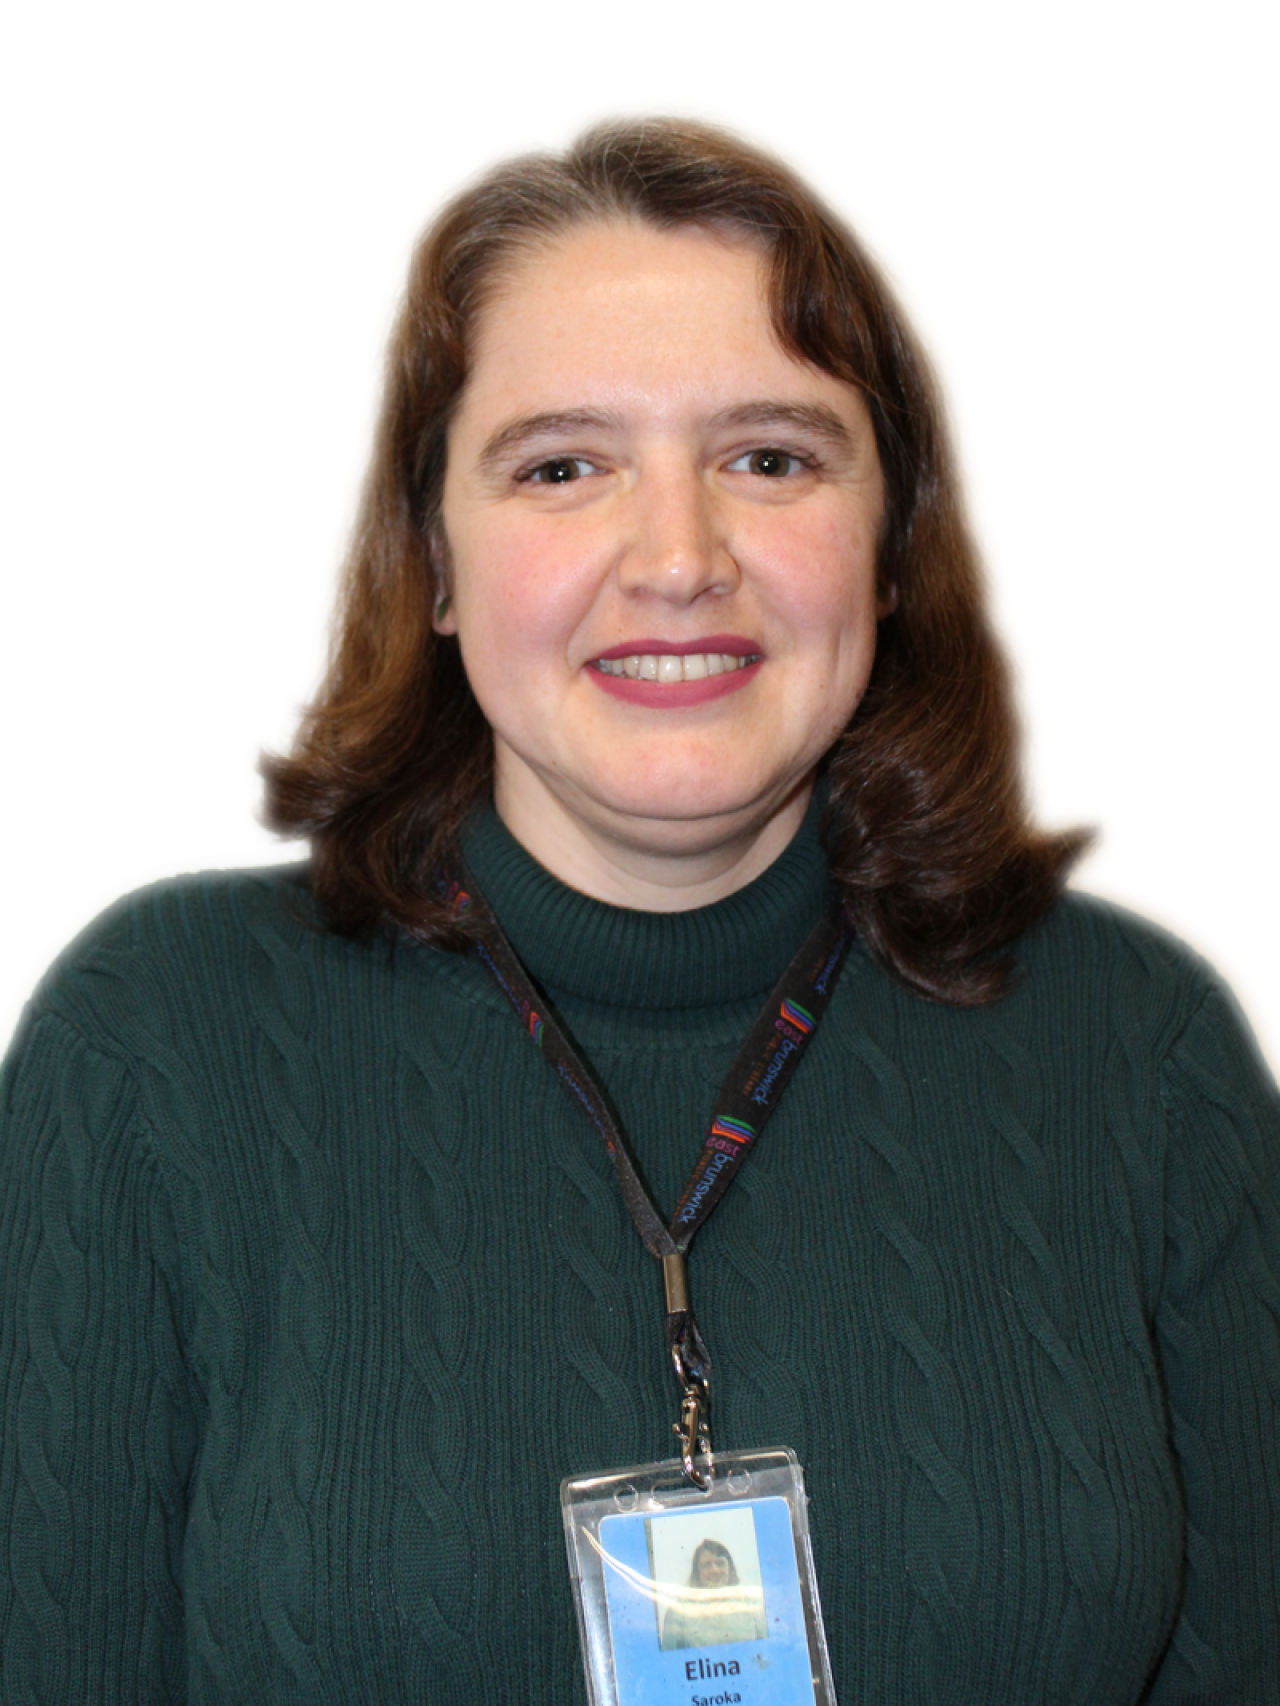 Elina Saroka - Health Librarian at EBPL